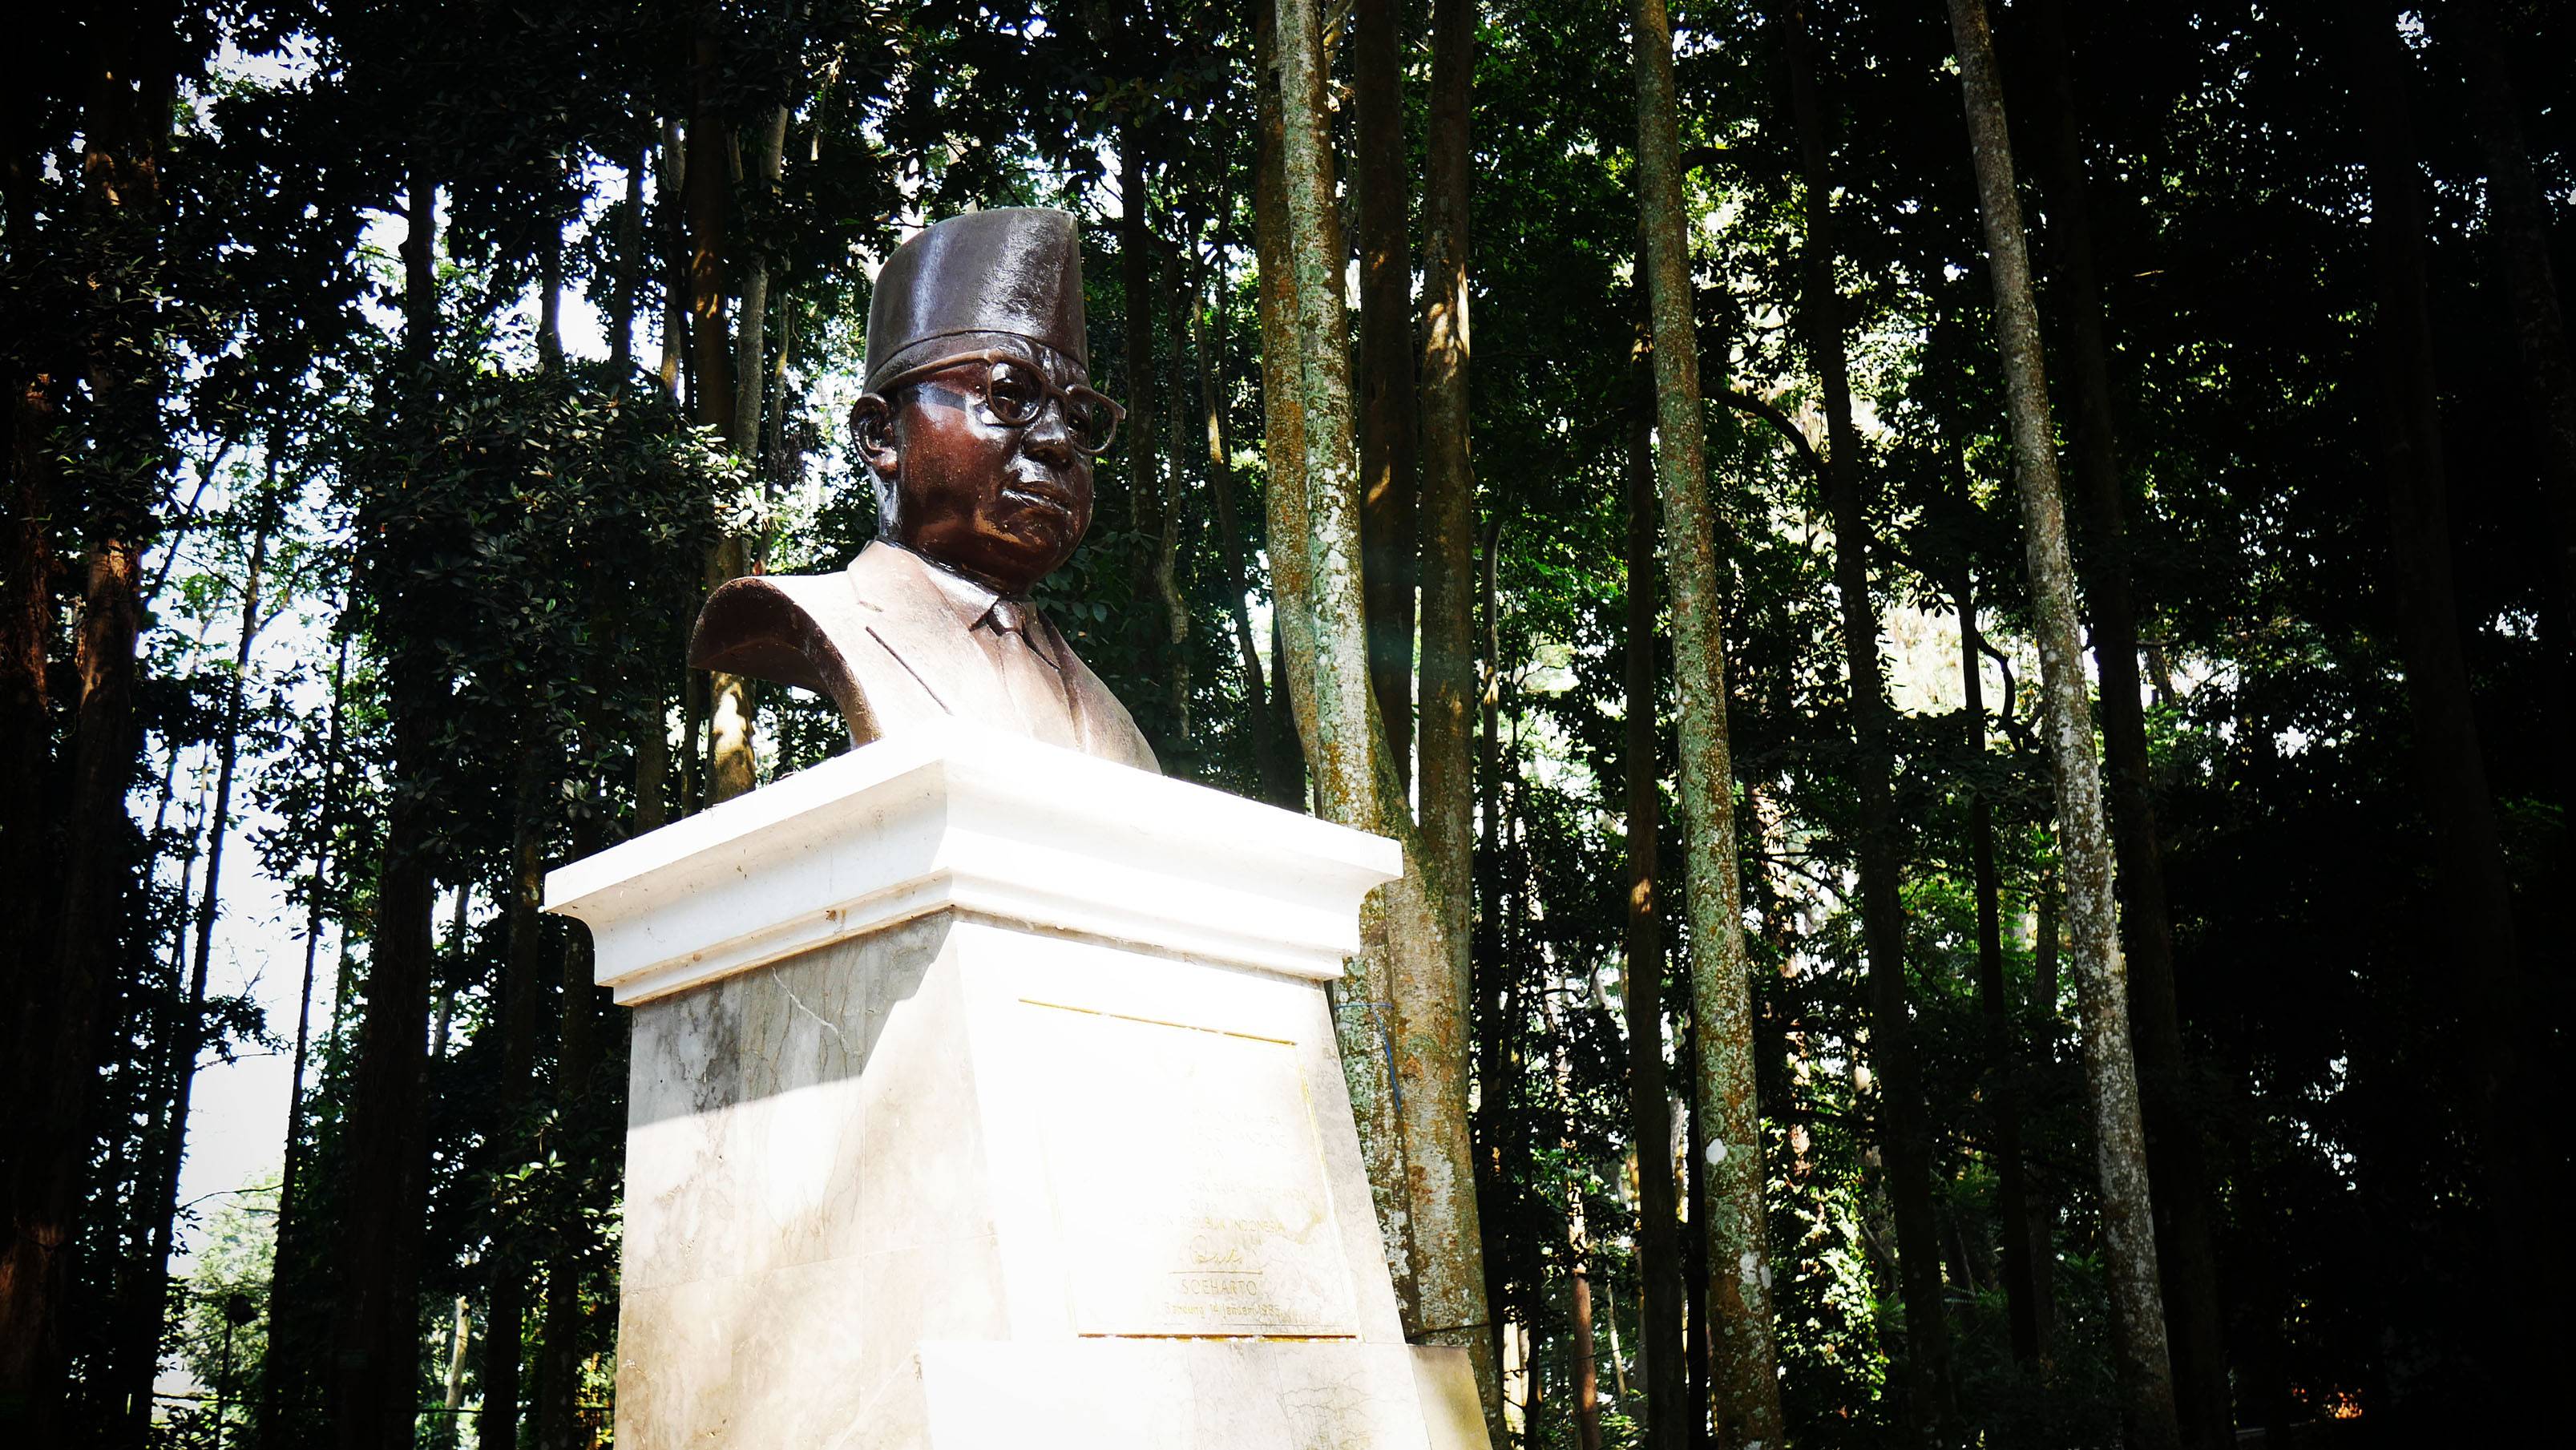 Patung Ir. H. Juanda di Taman Hutan Rakyat Juanda Dago Bandung Indonesia © Arakita Rimbayana